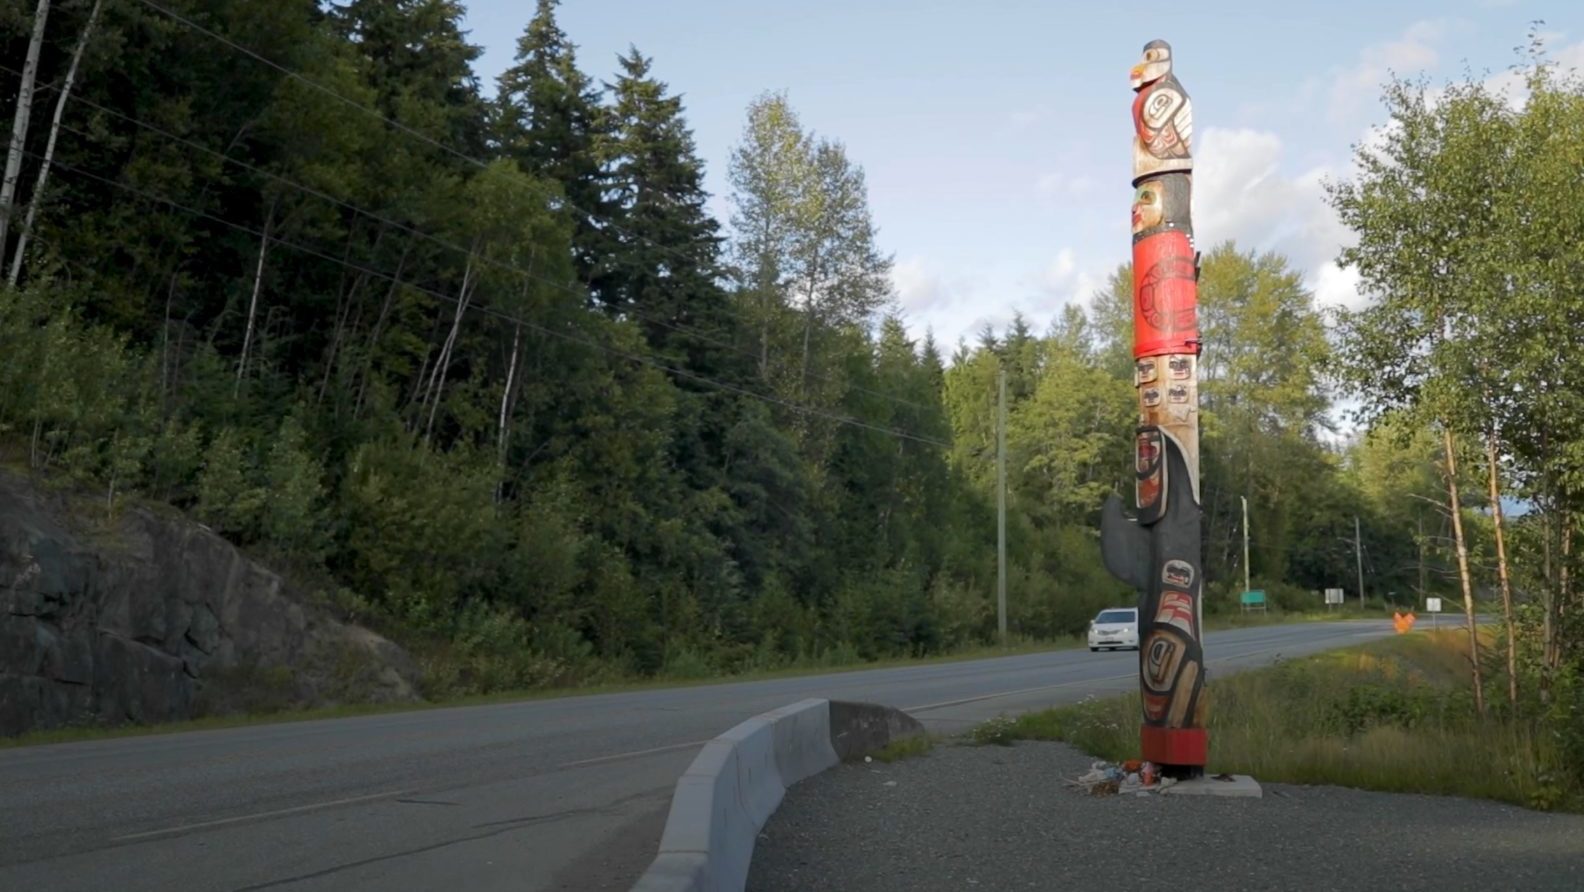 Totem pole on a highway